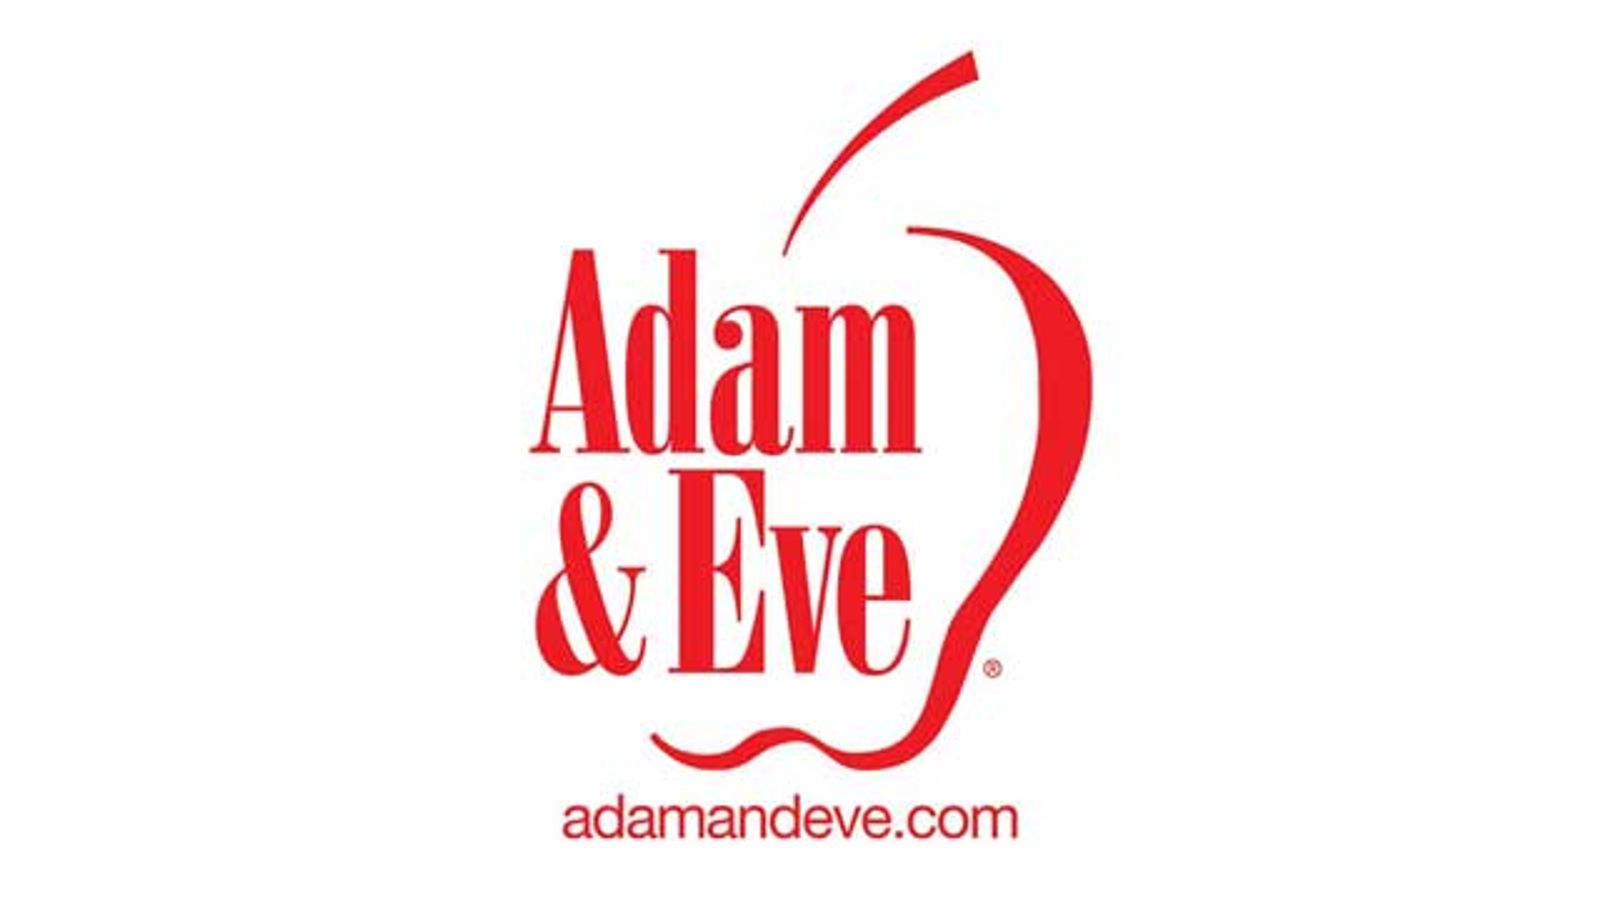 Adam & Eve To Open 50th Store In San Antonio on Saturday